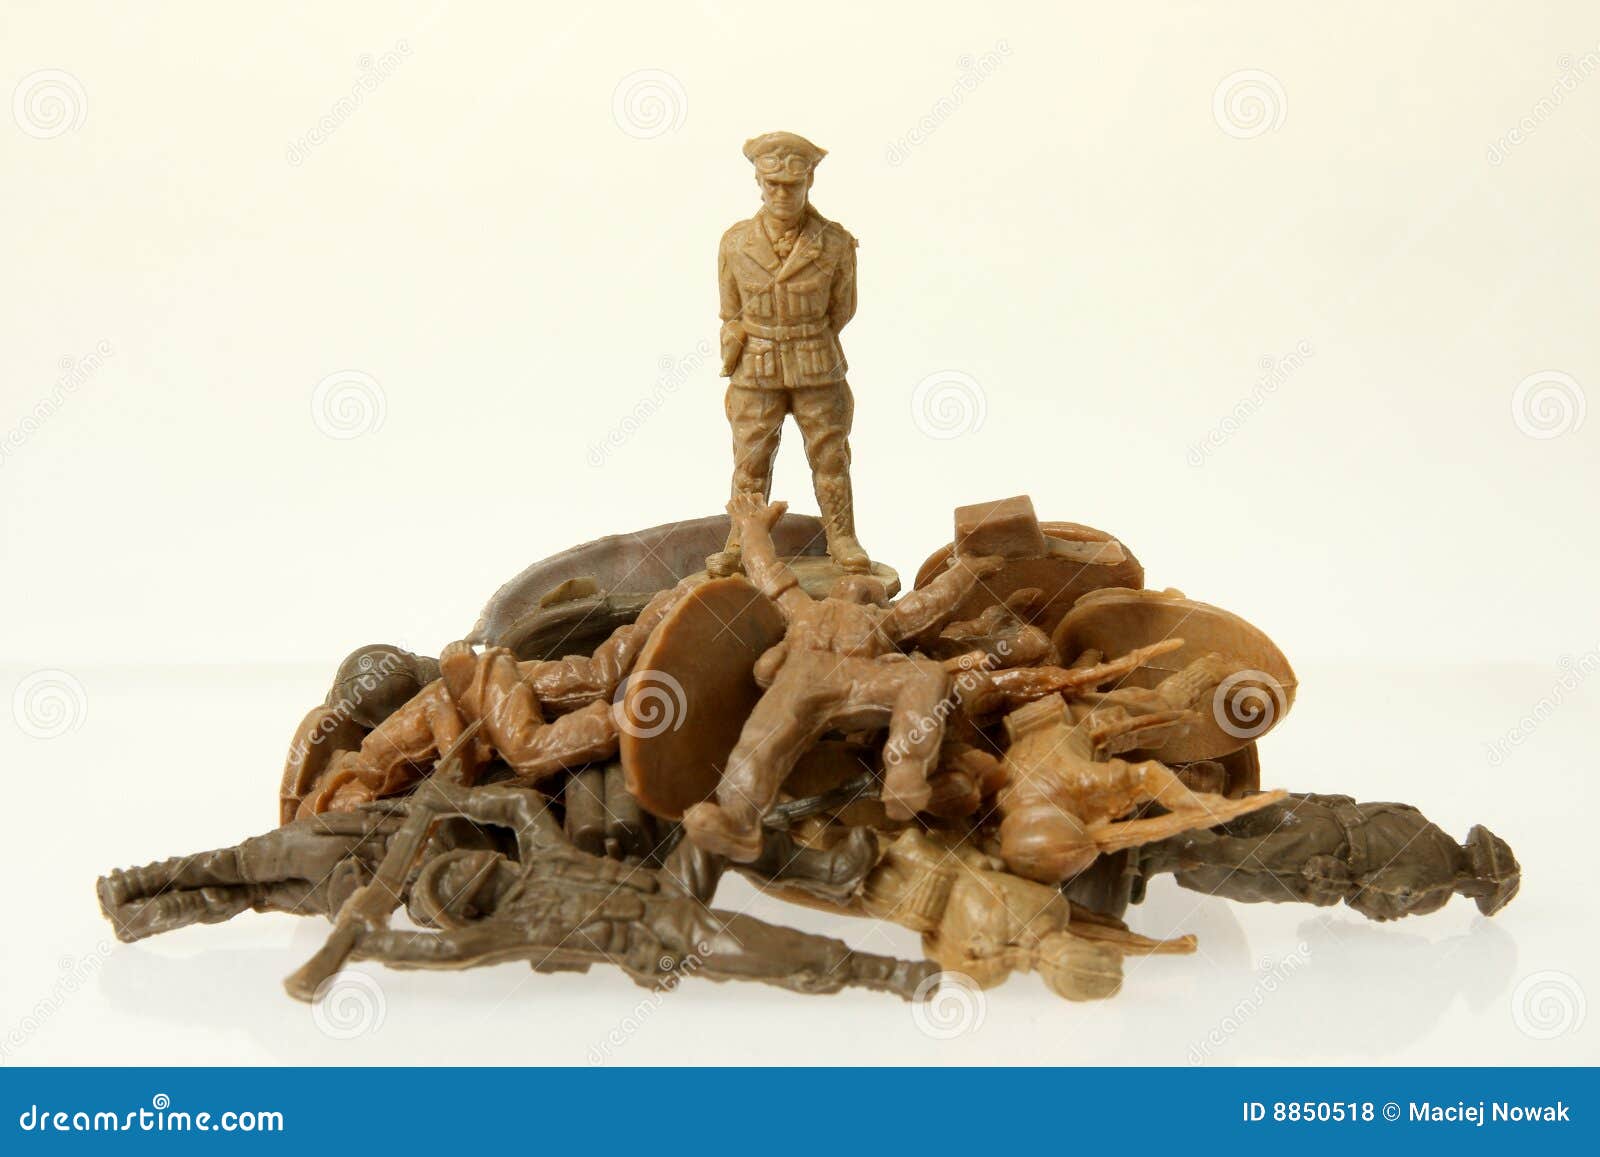 german toy soldier commander